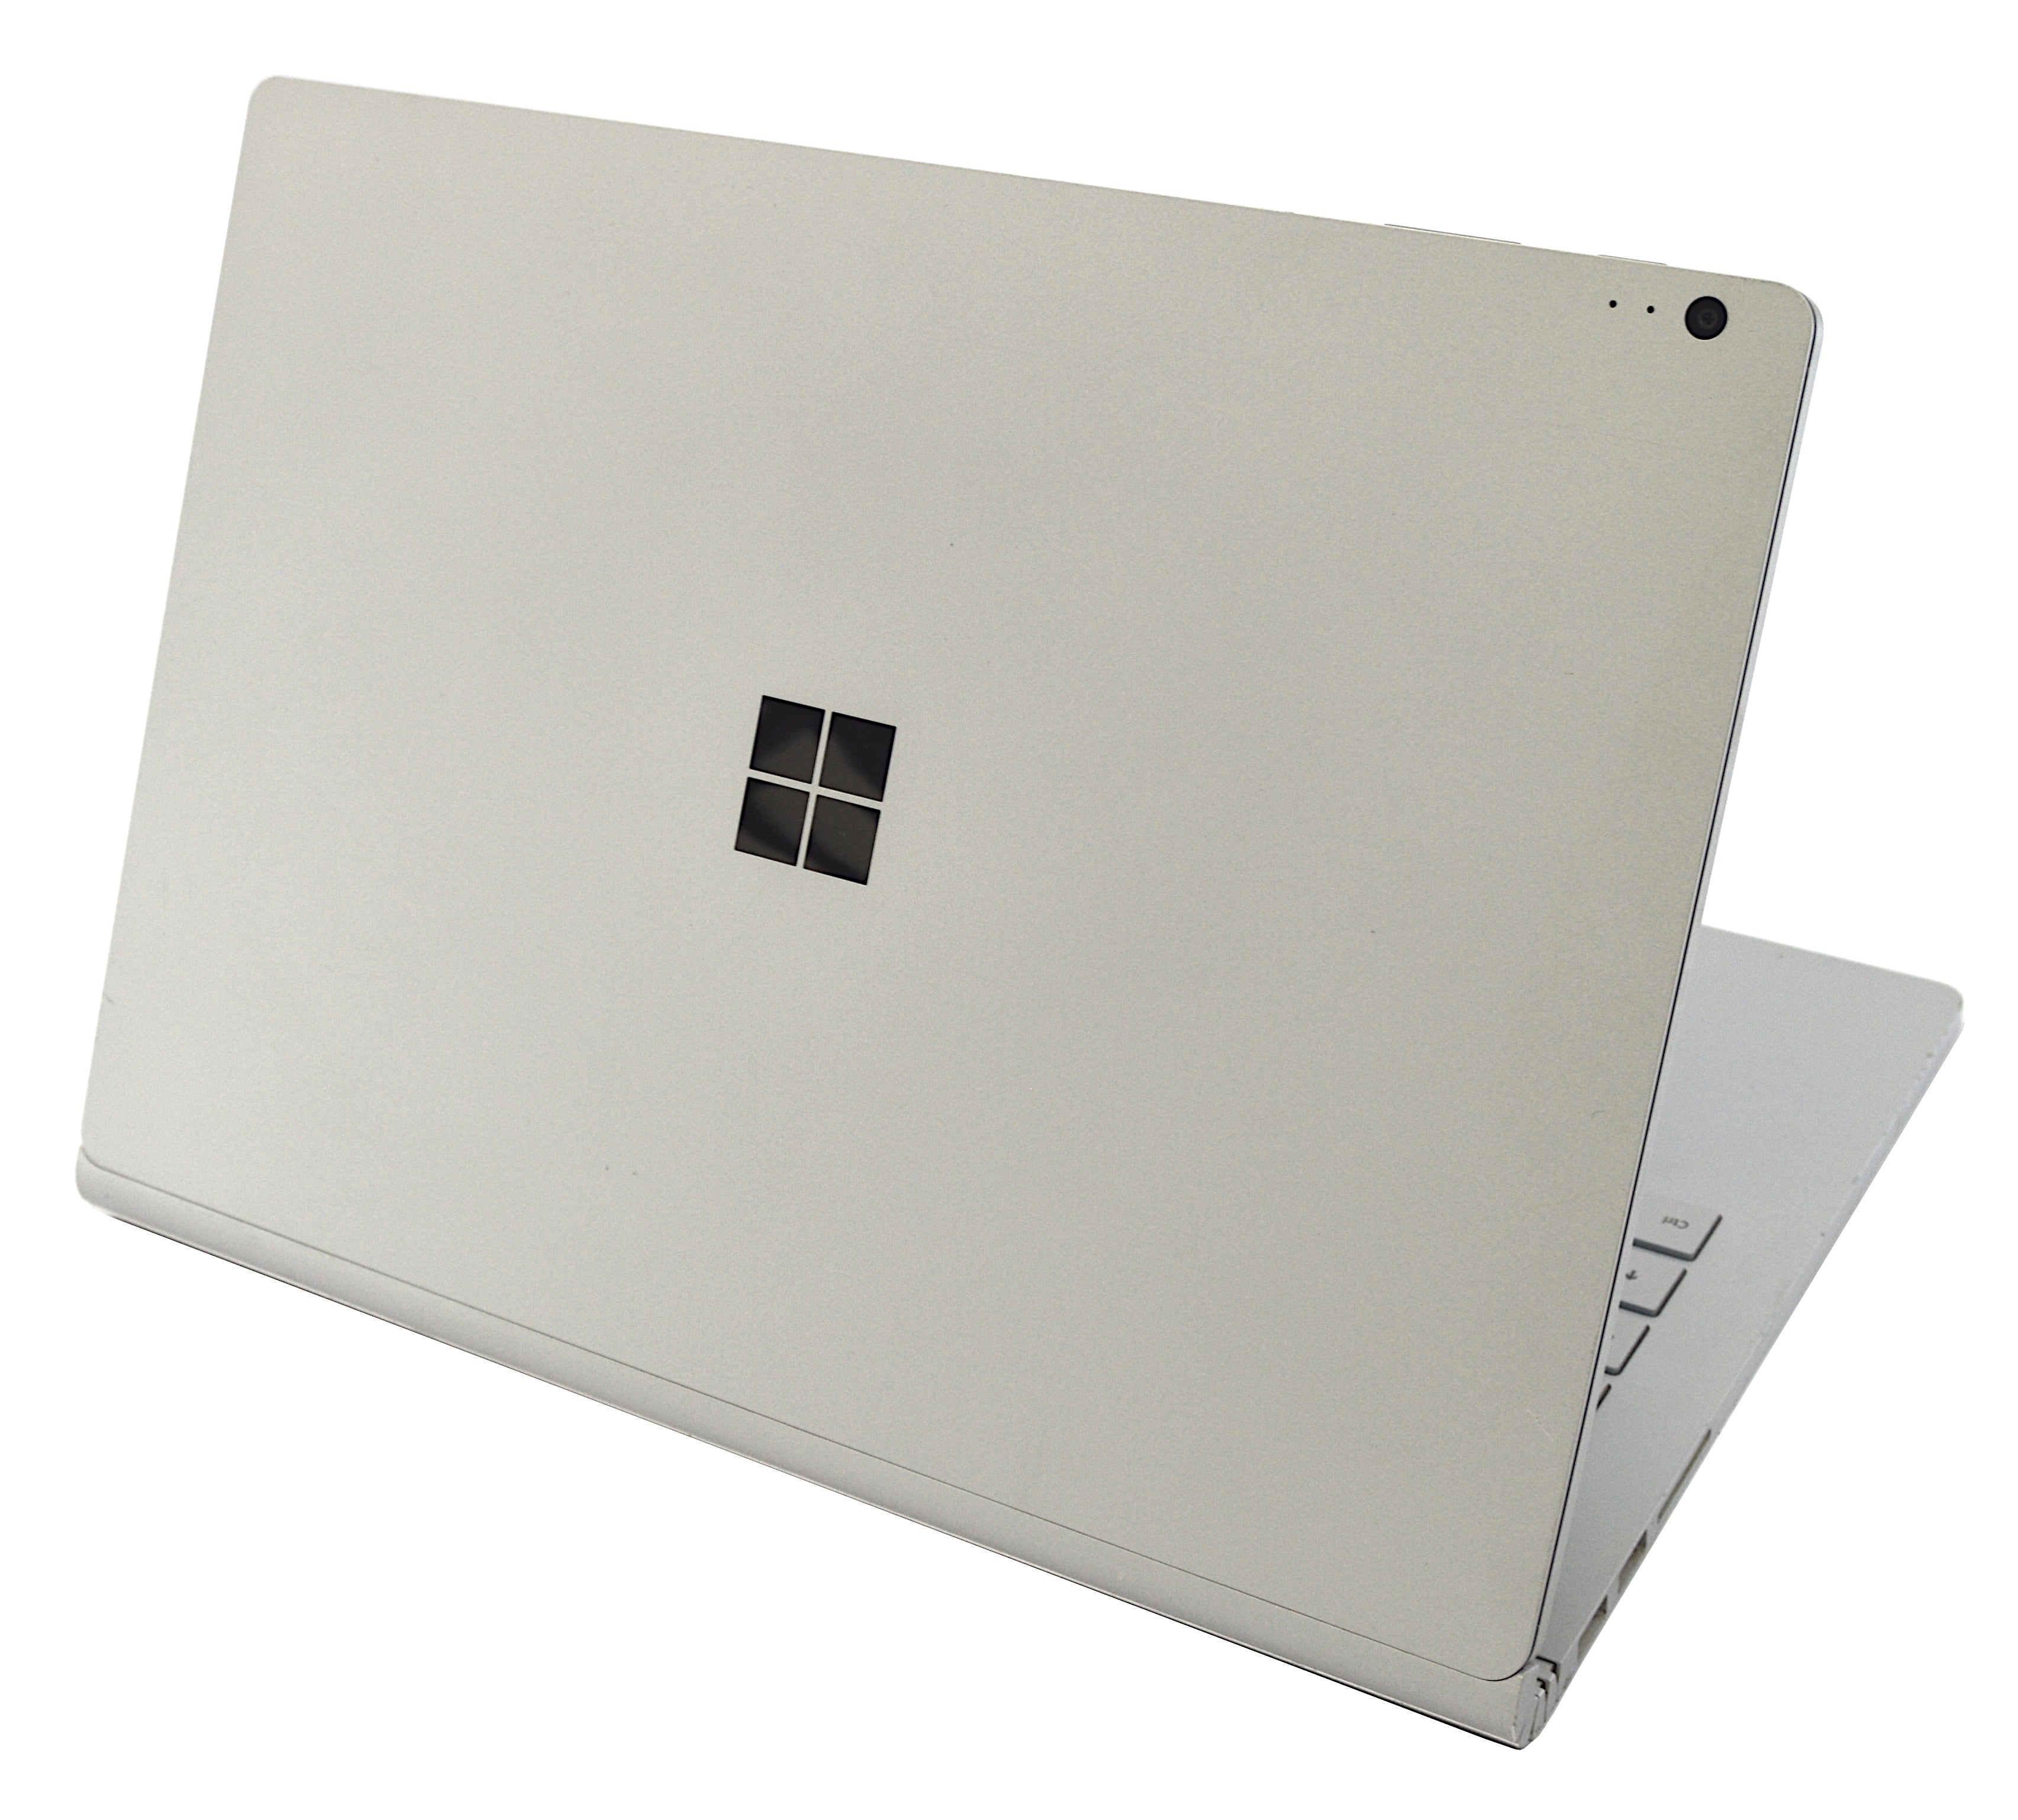 Microsoft Surface Book 2 Laptop, 13.5" i5 7th Gen, 8GB RAM, 256GB SSD